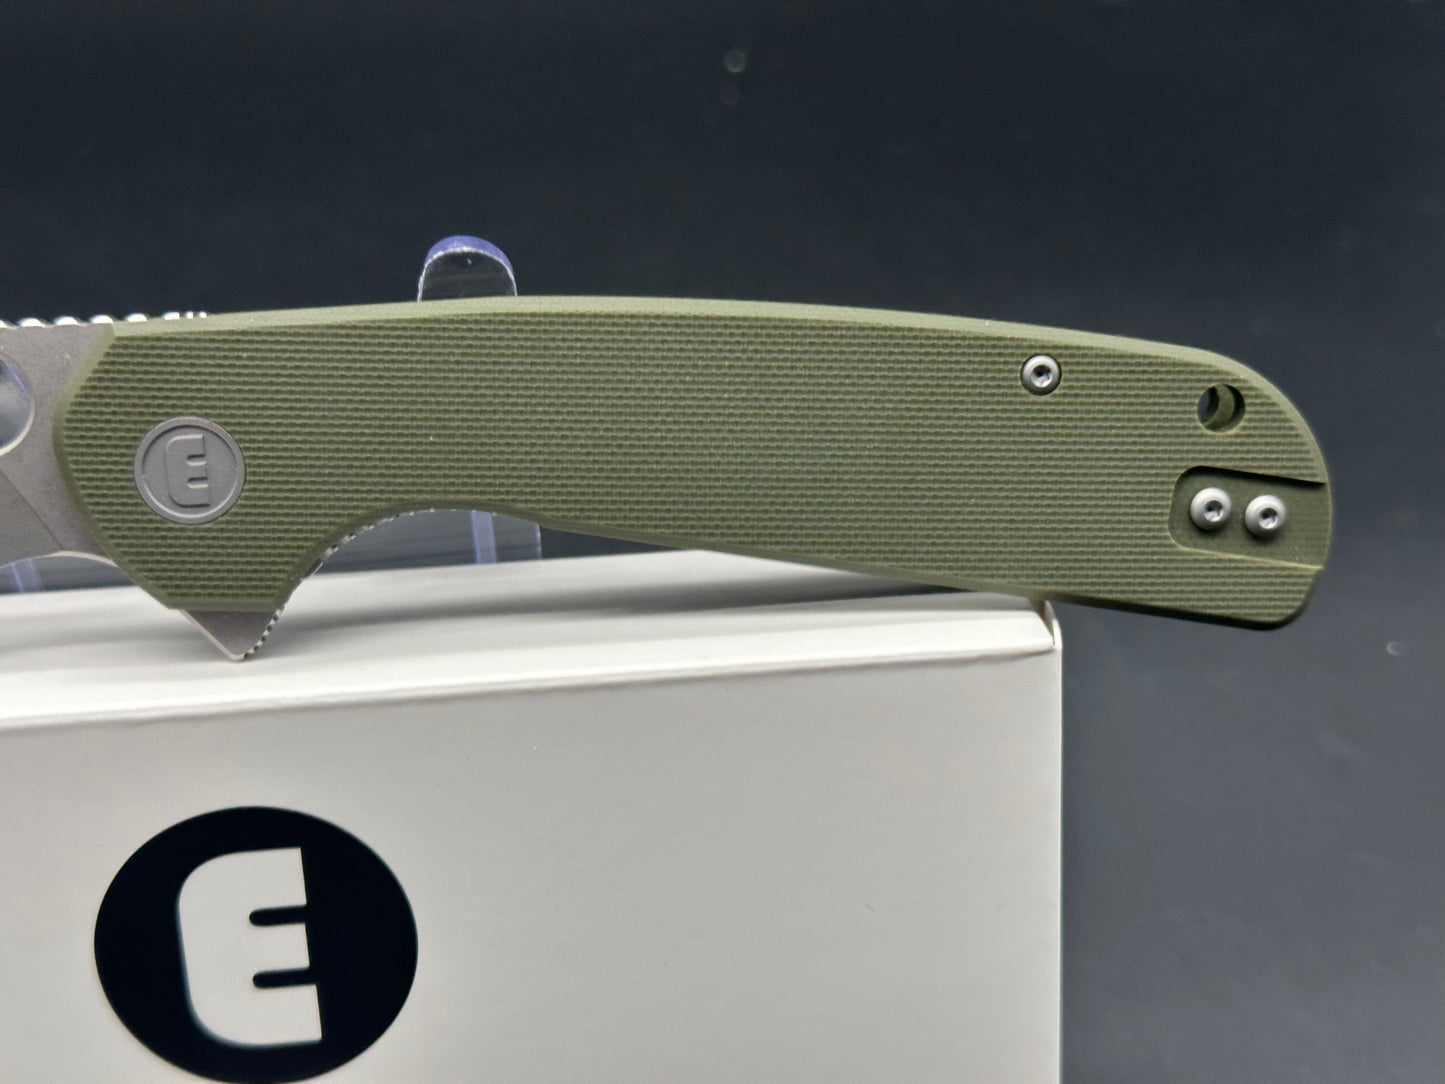 Eutektik Trinity OD Green G10 - New in box from Eutektik knives plus LTK Koozie/Patch & Sticker w/each knife